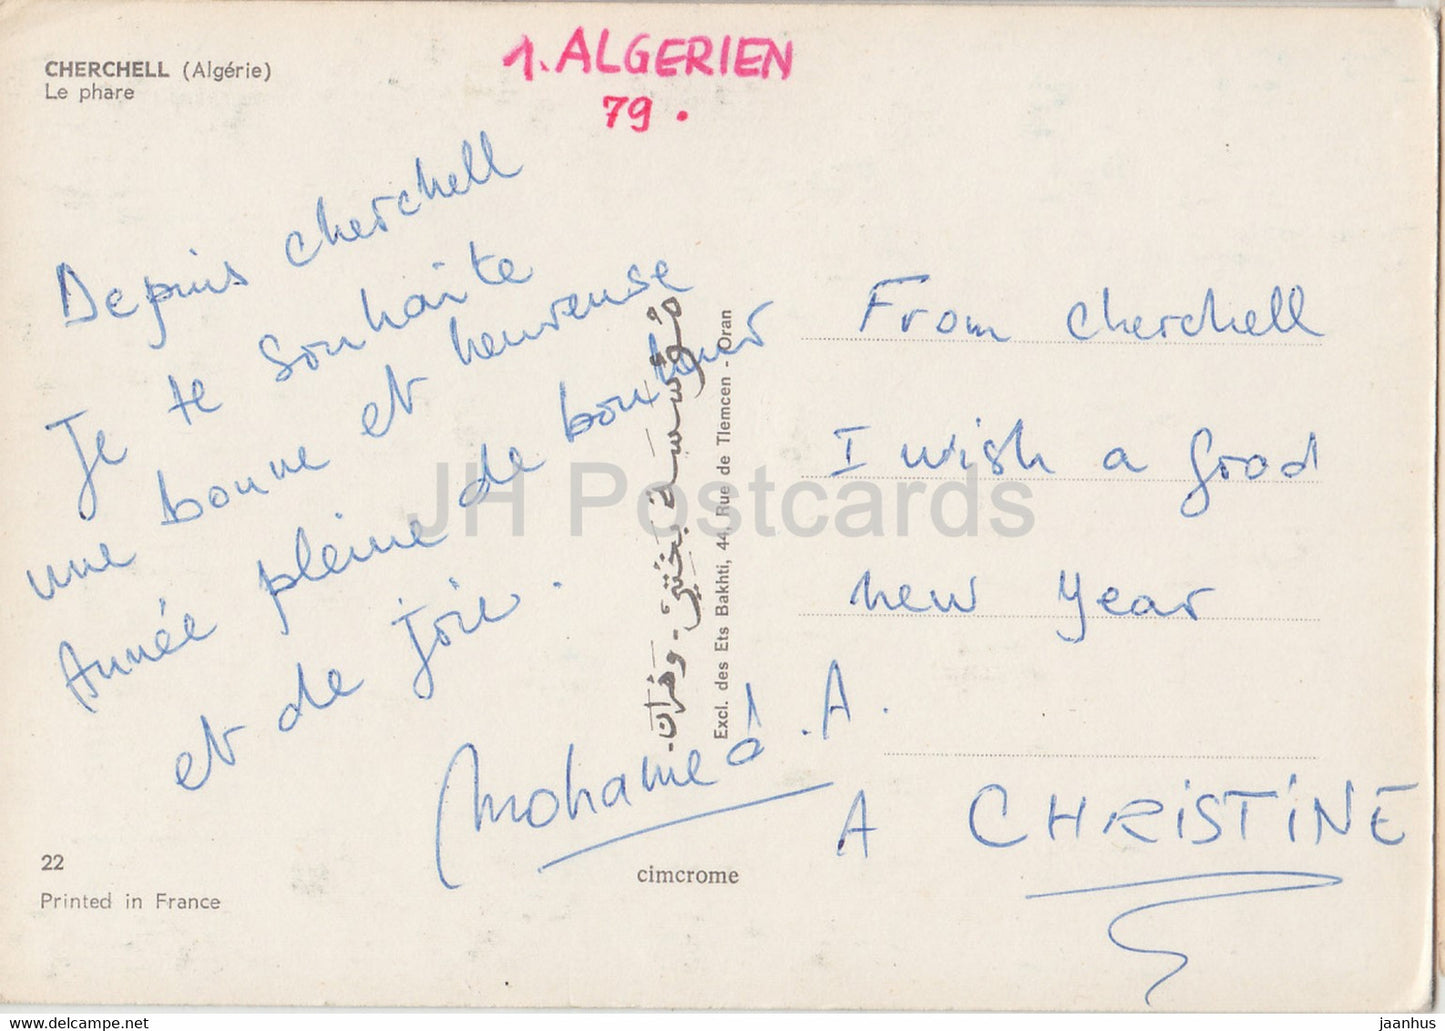 Cherchell - Le Phare - lighthouse - Beau Fixe - 1979 - Algeria - used